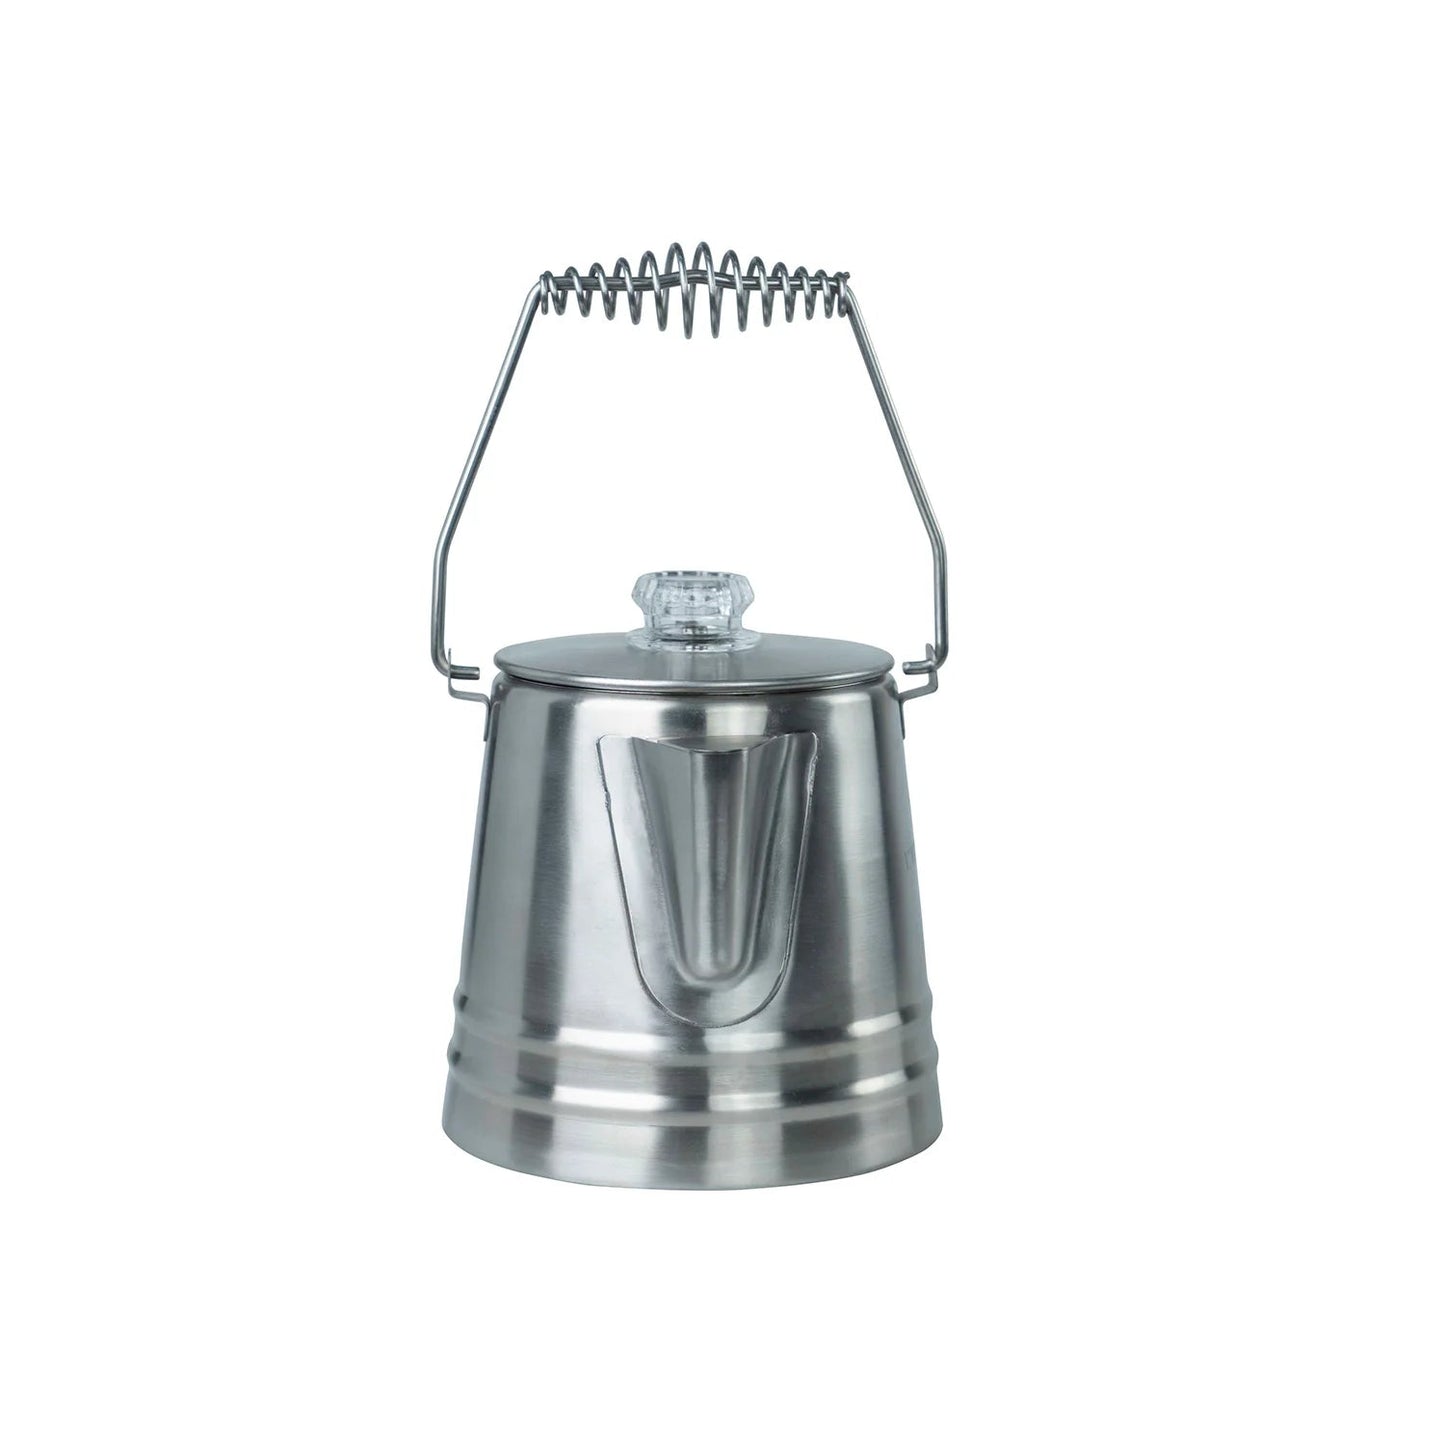 Winnerwell - 9 Cup Stainless Steel Percolator Coffee Pot - Big Horn Golfer